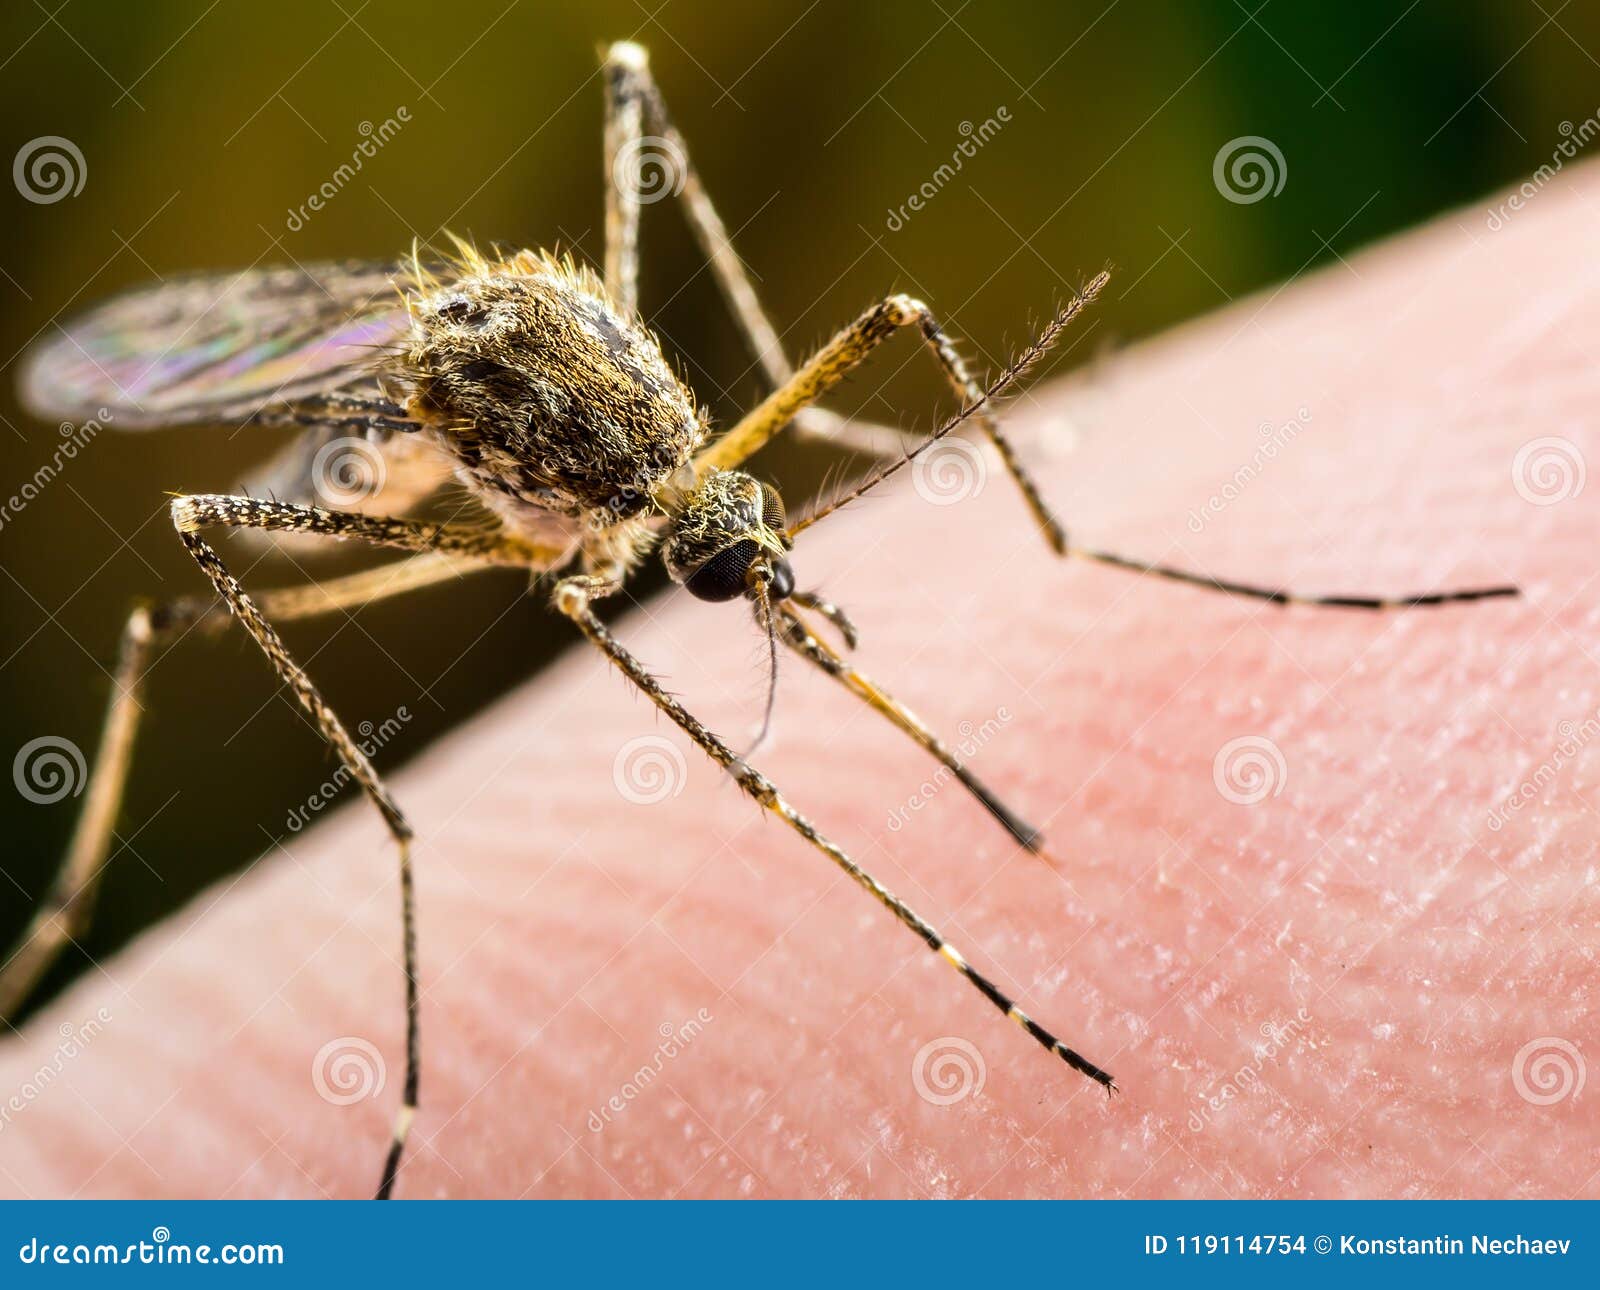 yellow fever, malaria or zika virus infected mosquito insect macro